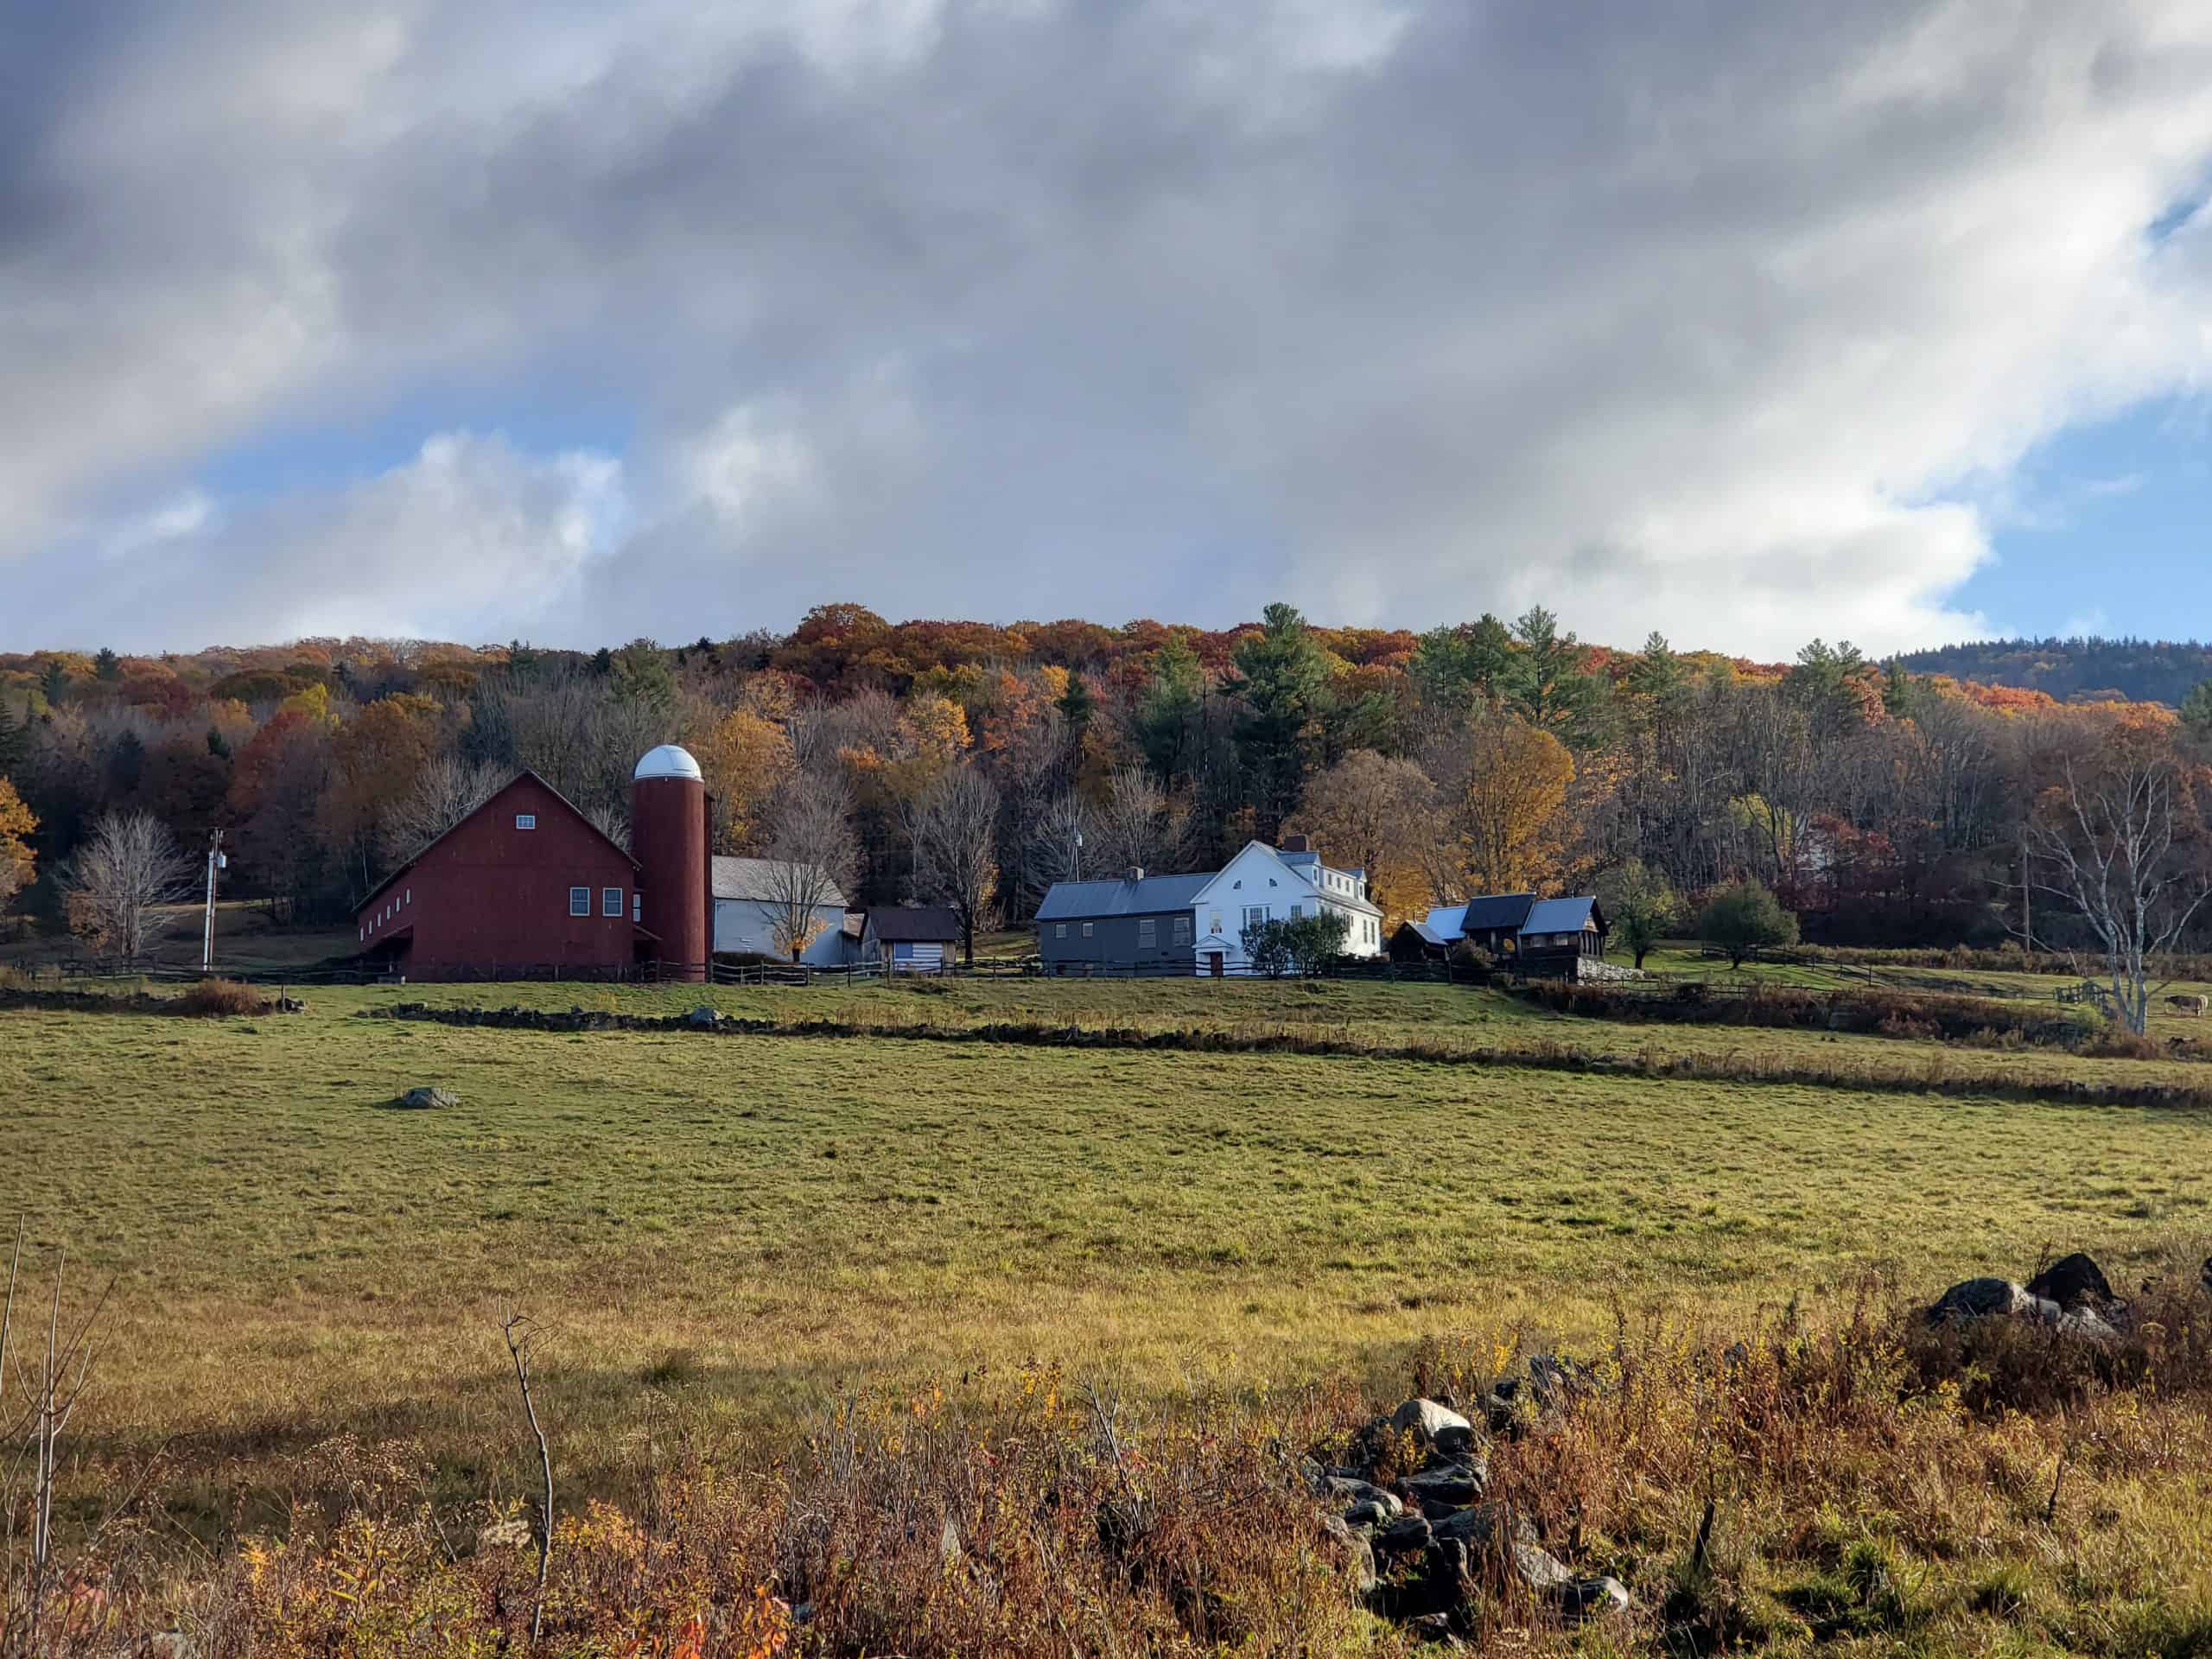 2019/10/23 - Farm near Weston, VT - by Renee-Marie Smith